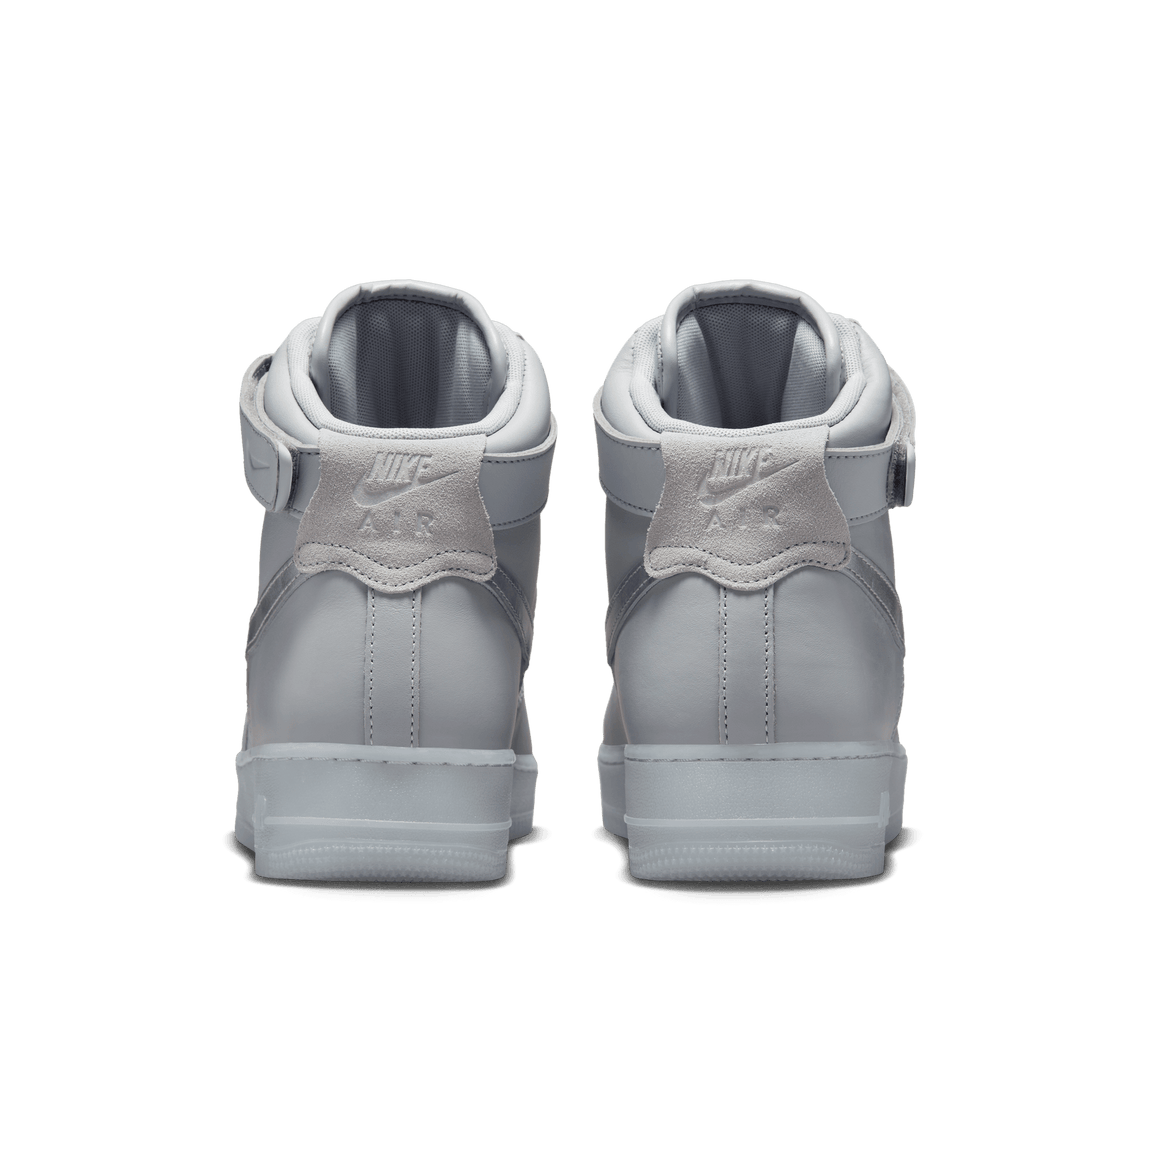 Nike Air Force 1 High '07 Premium (Wolf Grey/Metallic Silver-Volt) - Nike Air Force 1 High '07 Premium (Wolf Grey/Metallic Silver-Volt) - 